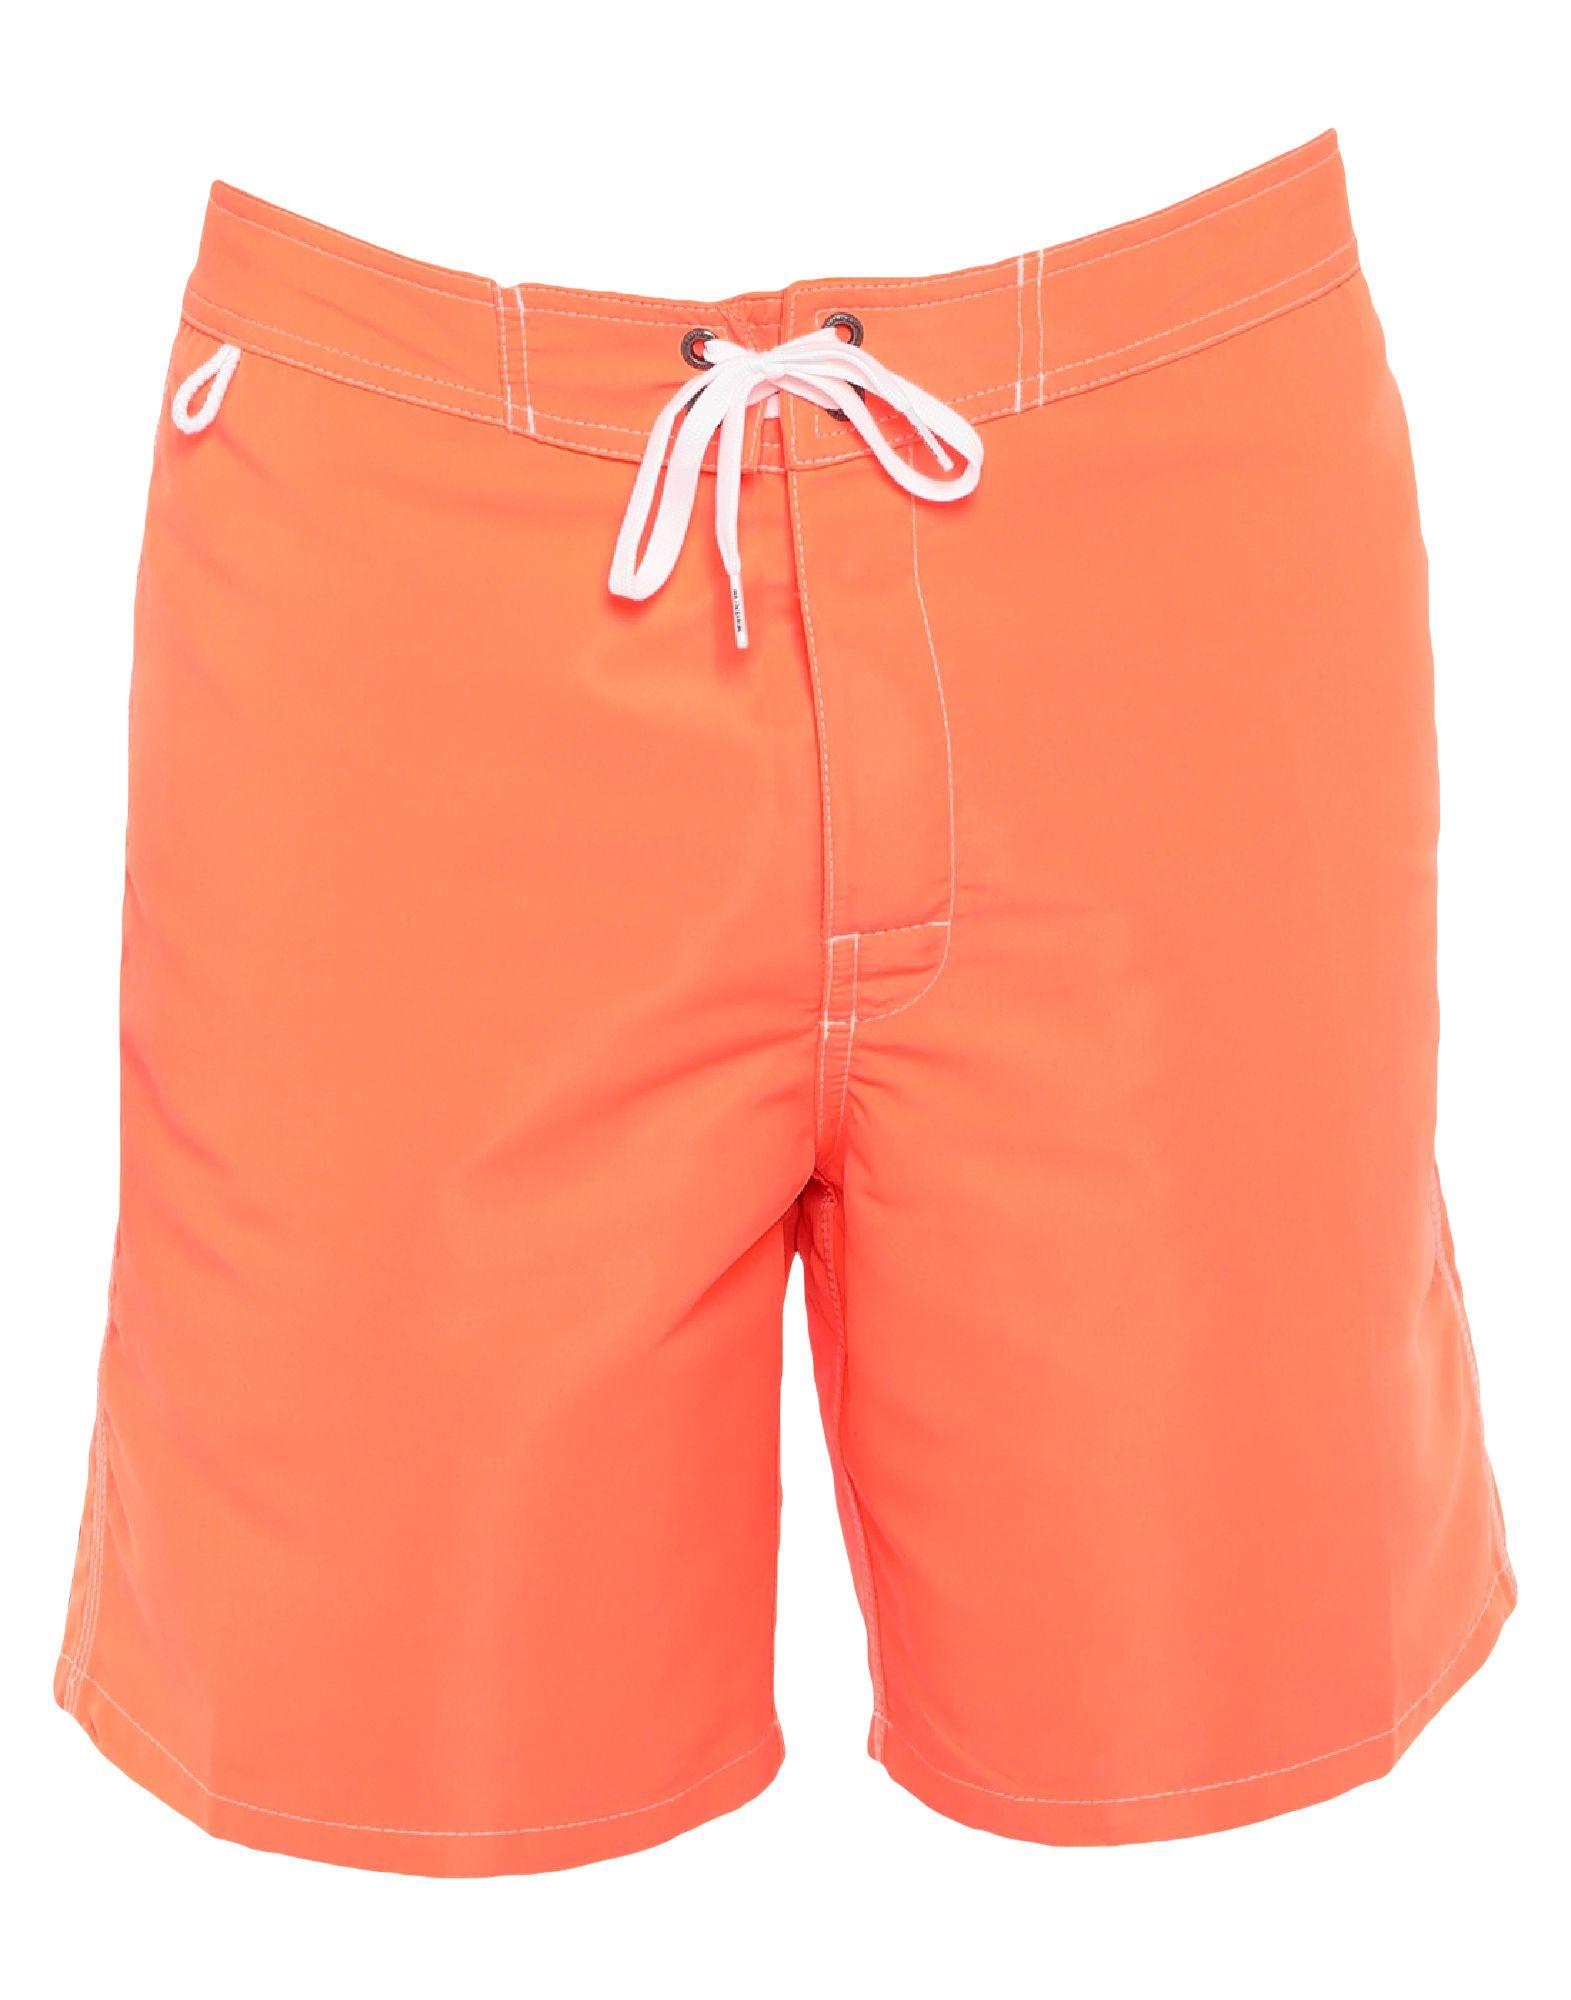 Sundek Synthetic Swim Trunks in Coral (Orange) for Men - Lyst